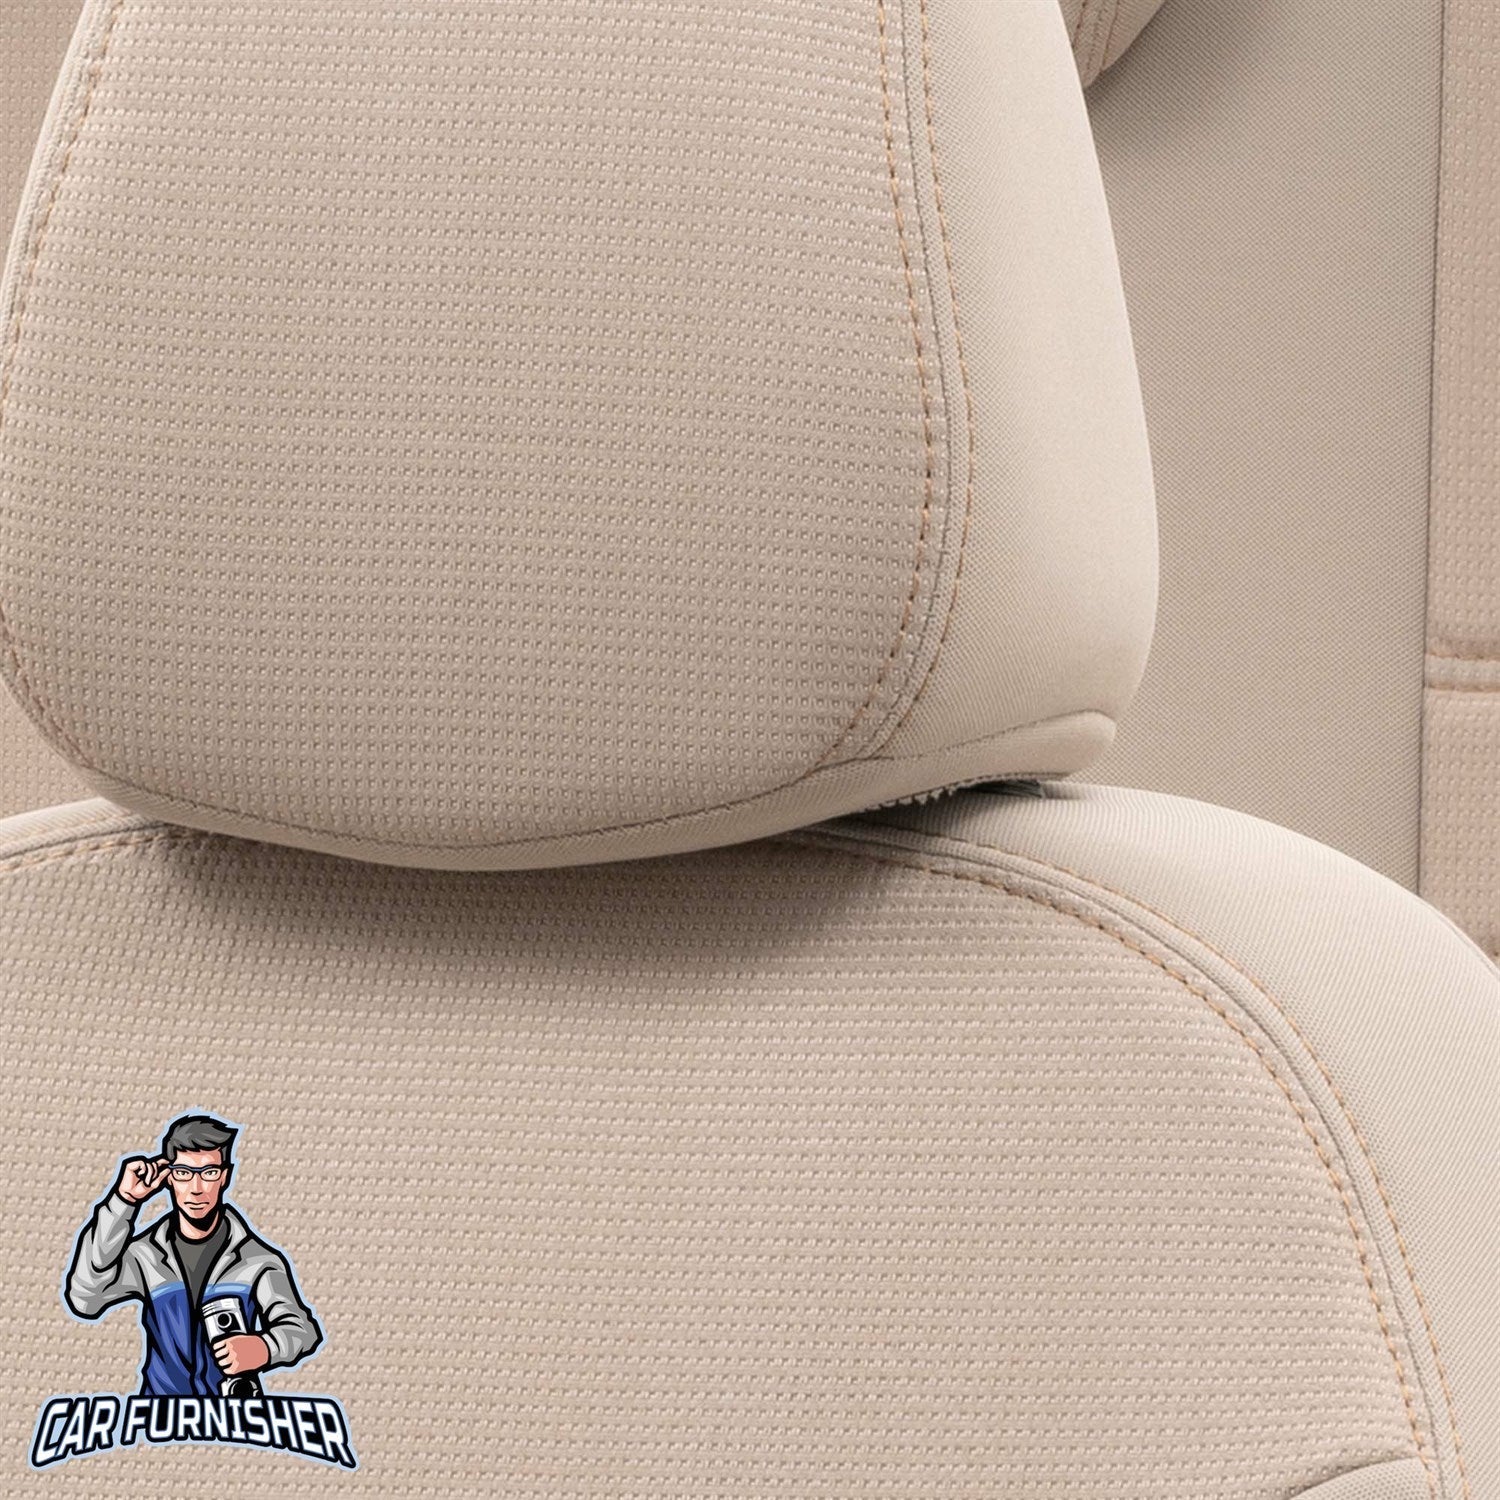 Isuzu Nkr Seat Covers Original Jacquard Design Beige Jacquard Fabric